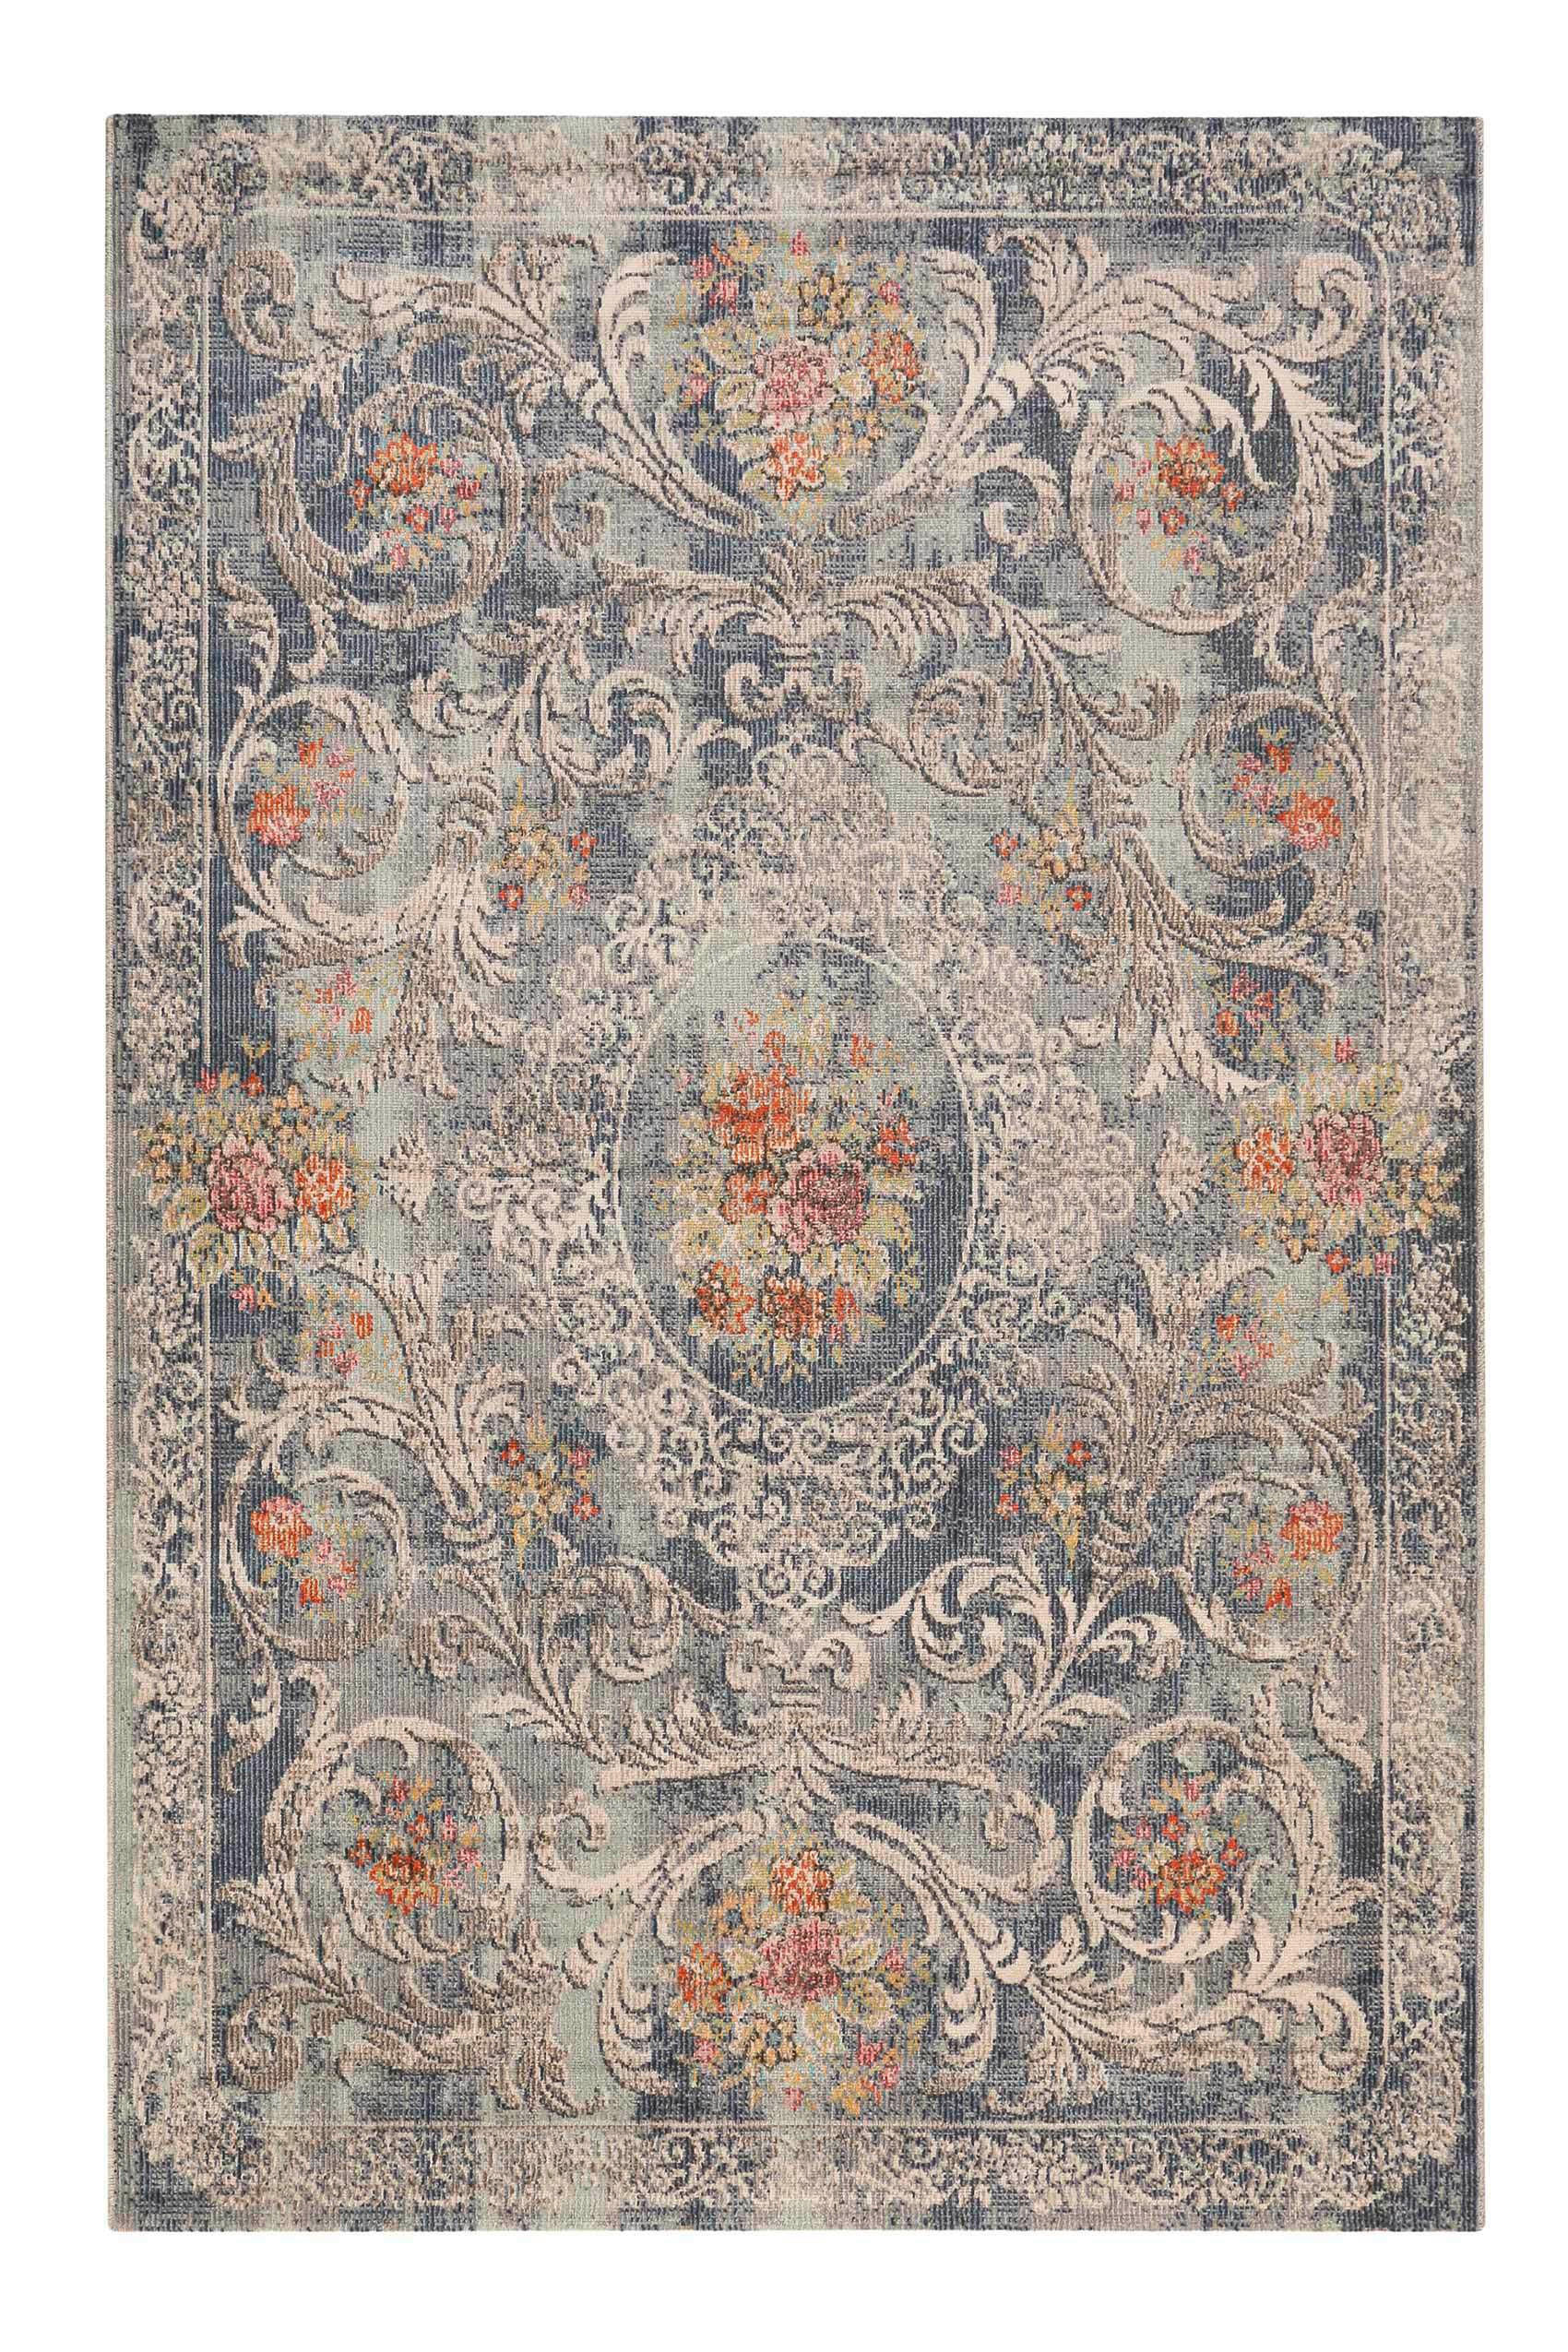 OUTDOORTEPPICH  80/150 cm  Blau   - Blau, Design, Textil (80/150cm) - Novel